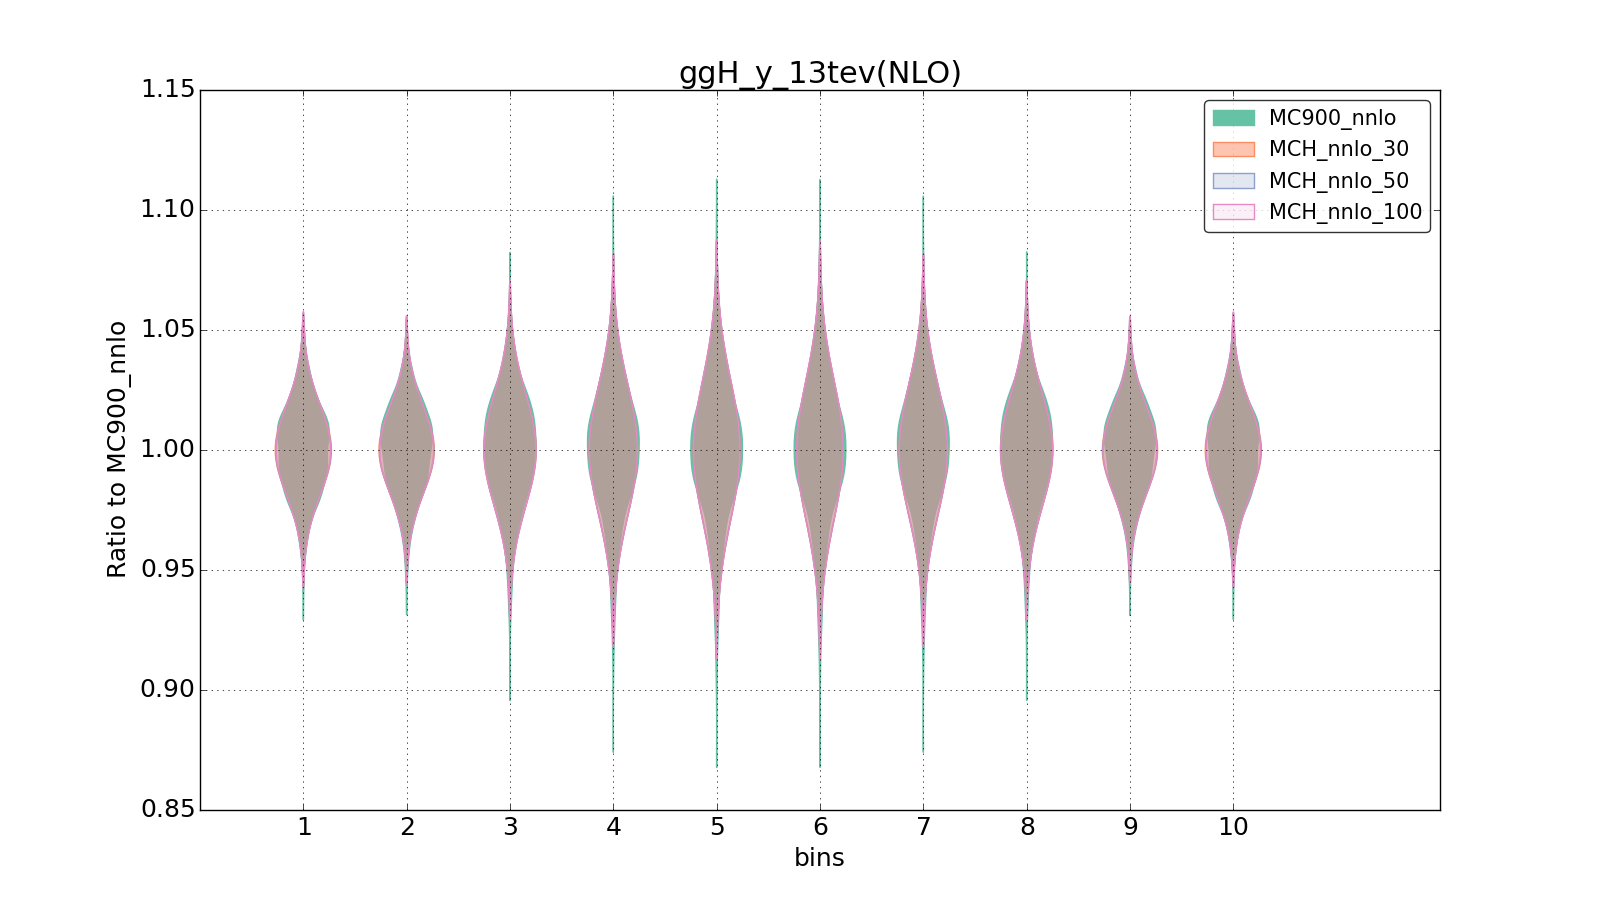 figure plots/pheno_new/NNLO/violinplot_ggH_y_13tev(NLO).png